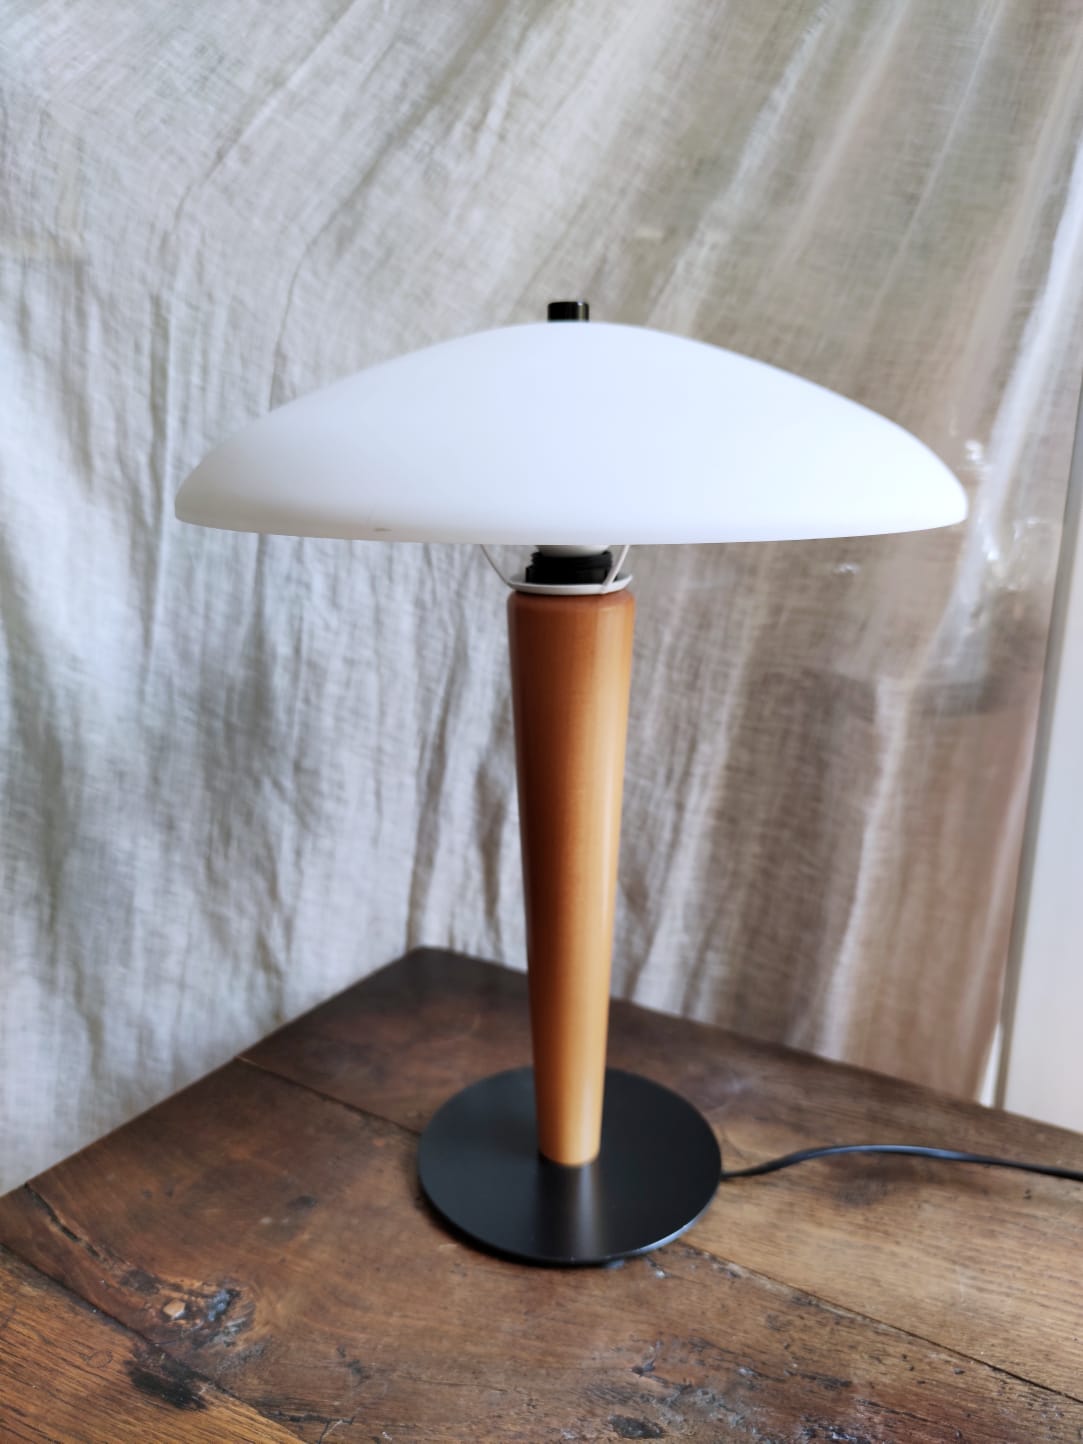 Lampe champignon Aluminor